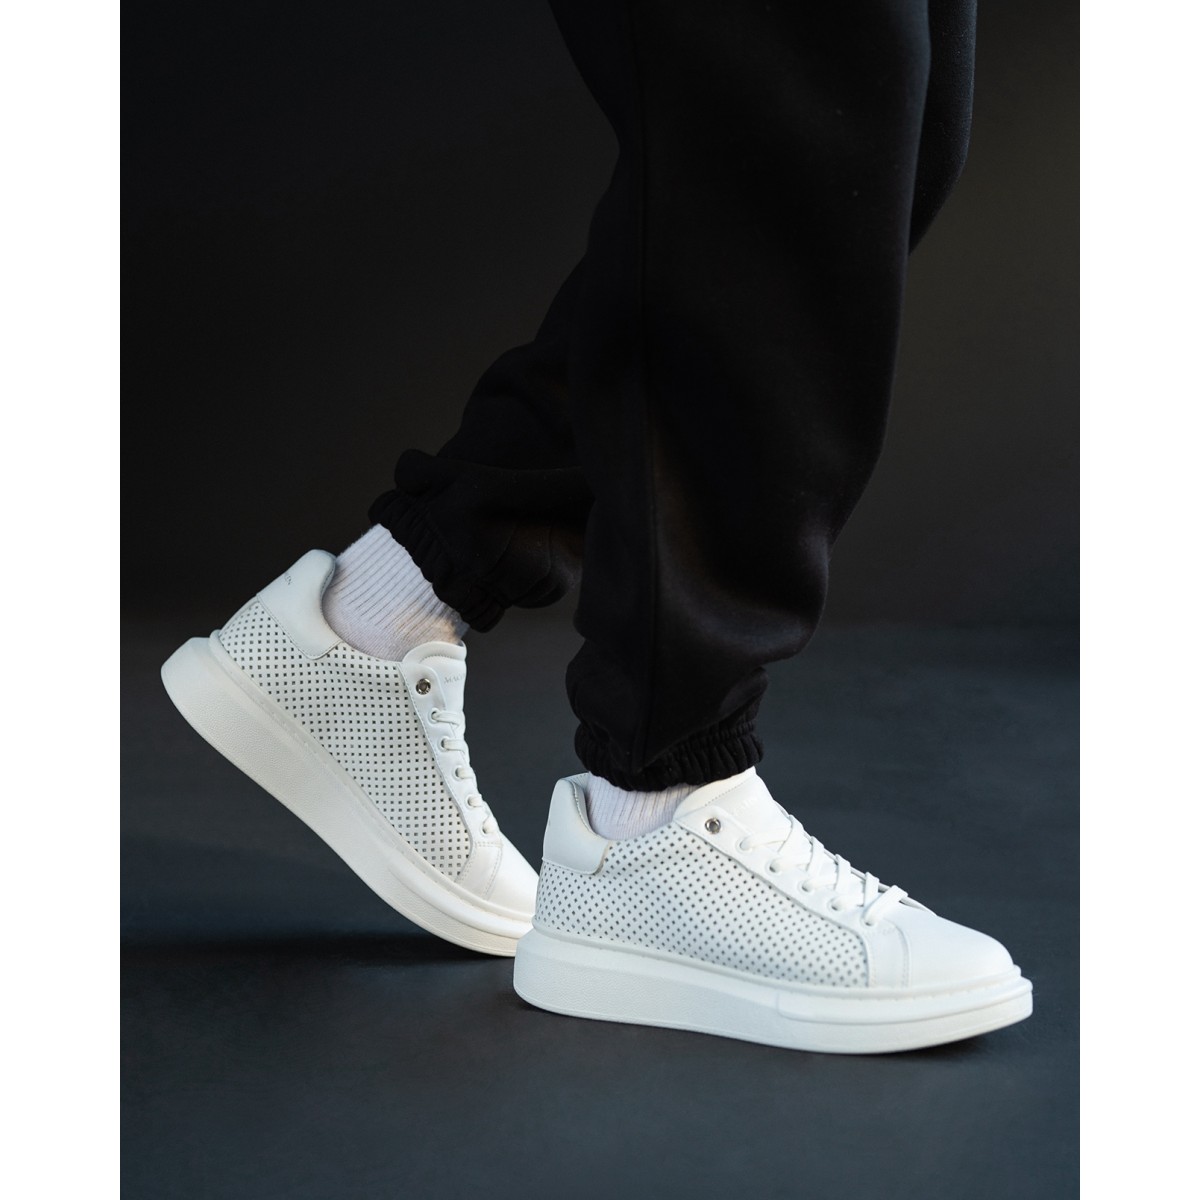 sneakers basket chaussure homme tissu maille sport marche légère blanc  blanche